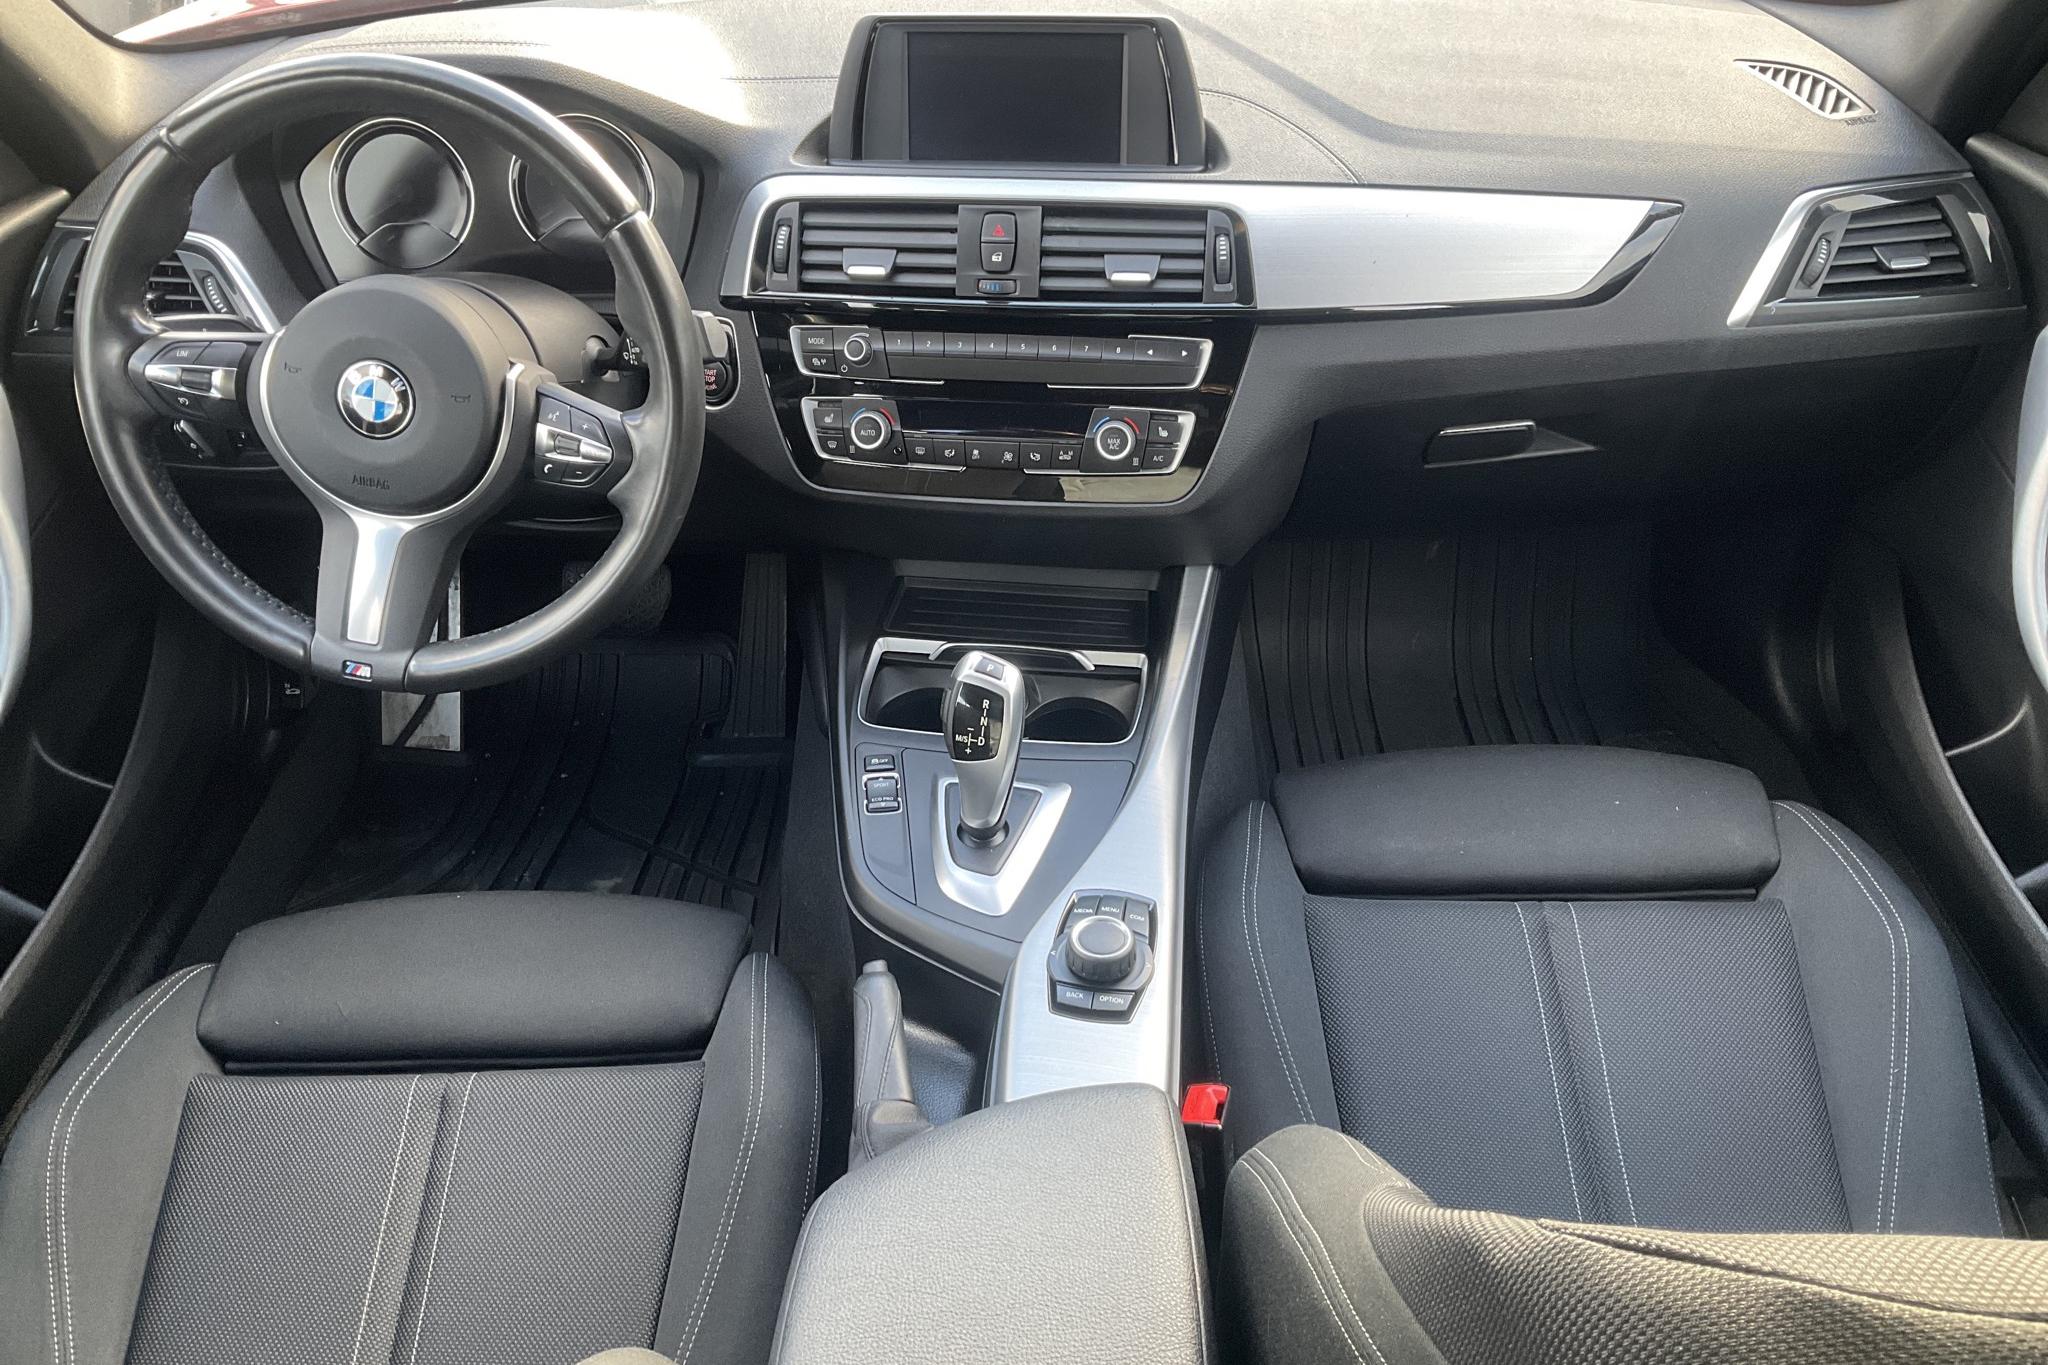 BMW 120i 5dr, F20 (184hk) - 51 380 km - Automatic - orange - 2019